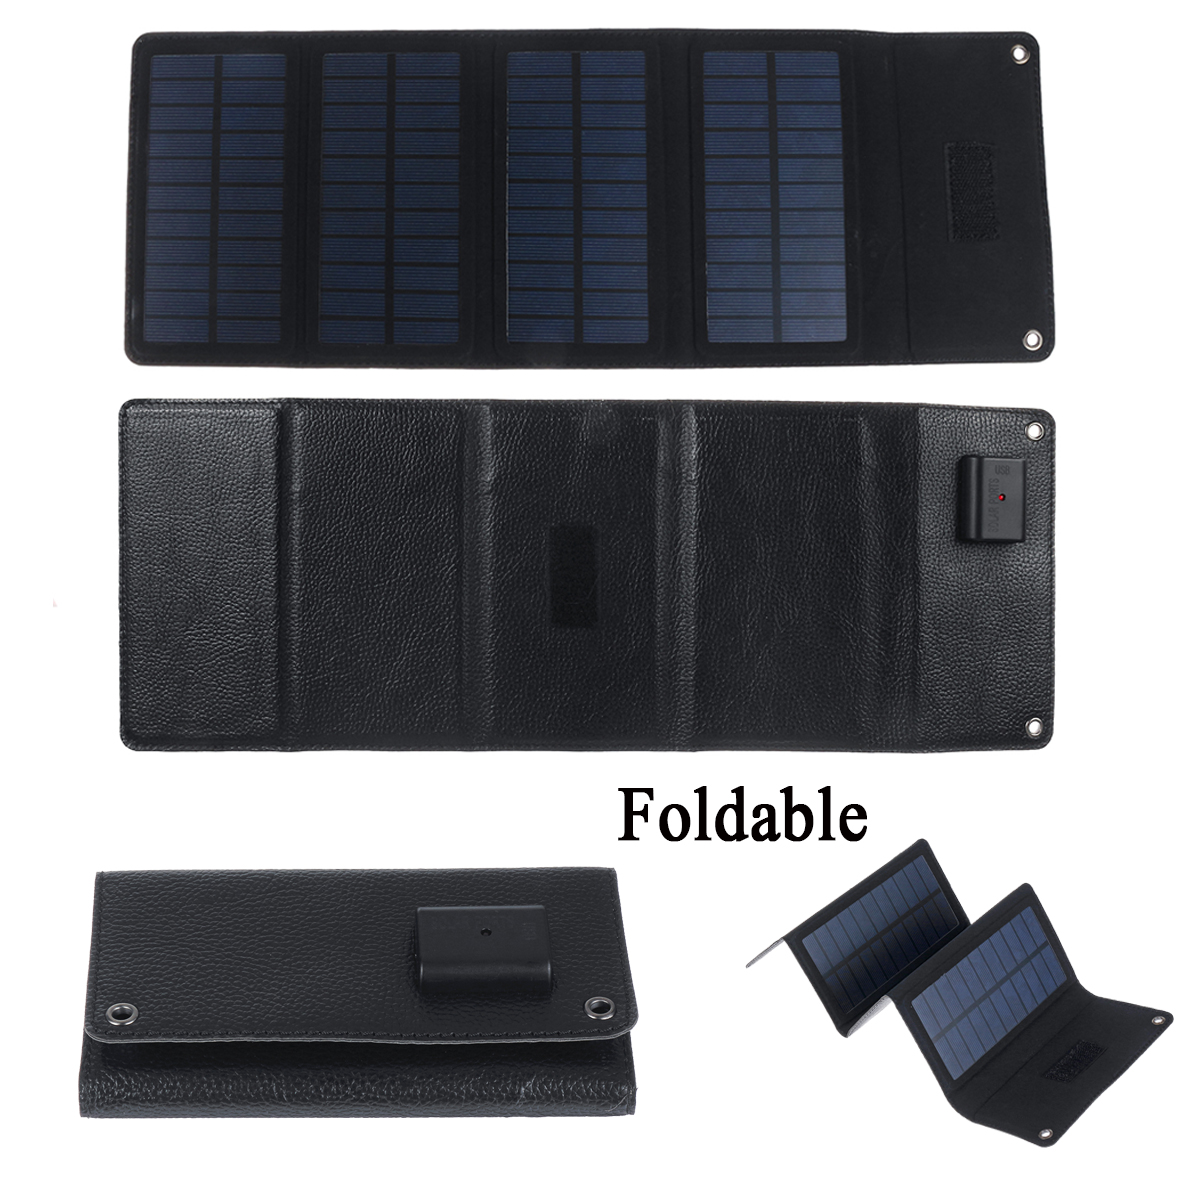 7W 5V Waterproof Foldable Mono-crystalline Silicon Solar Panel With LED Charging indicator & USB Interface 14